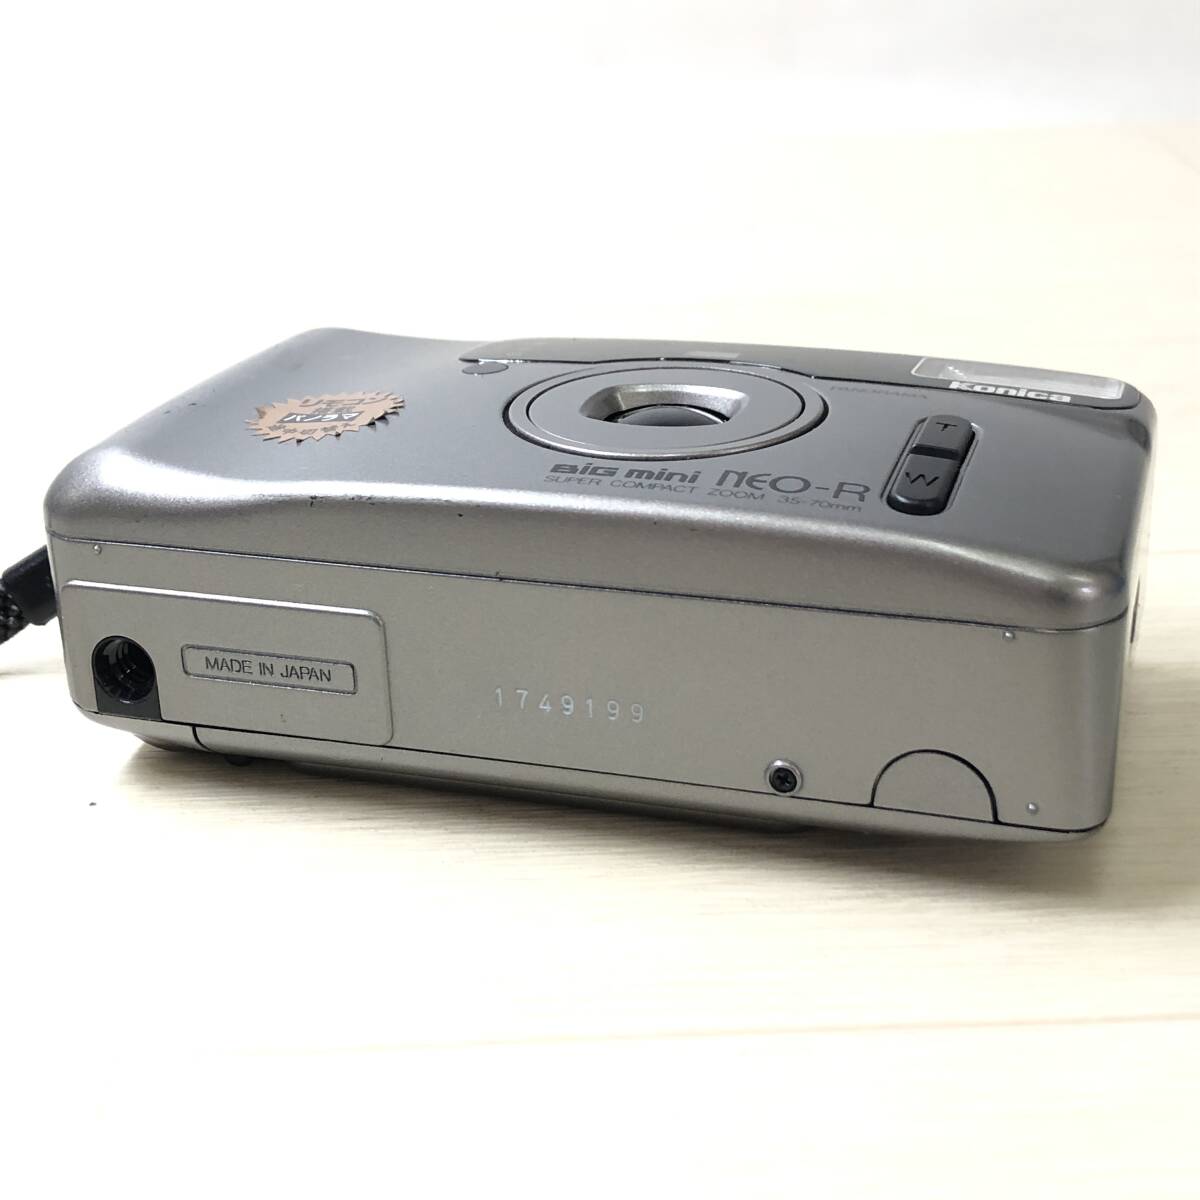 ♪Konica コニカ コンパクトカメラ BIGmini NEO-R SUPER COMPACT ZOOM 35-70mm 動作未確認 ジャンク品♪K23106の画像5